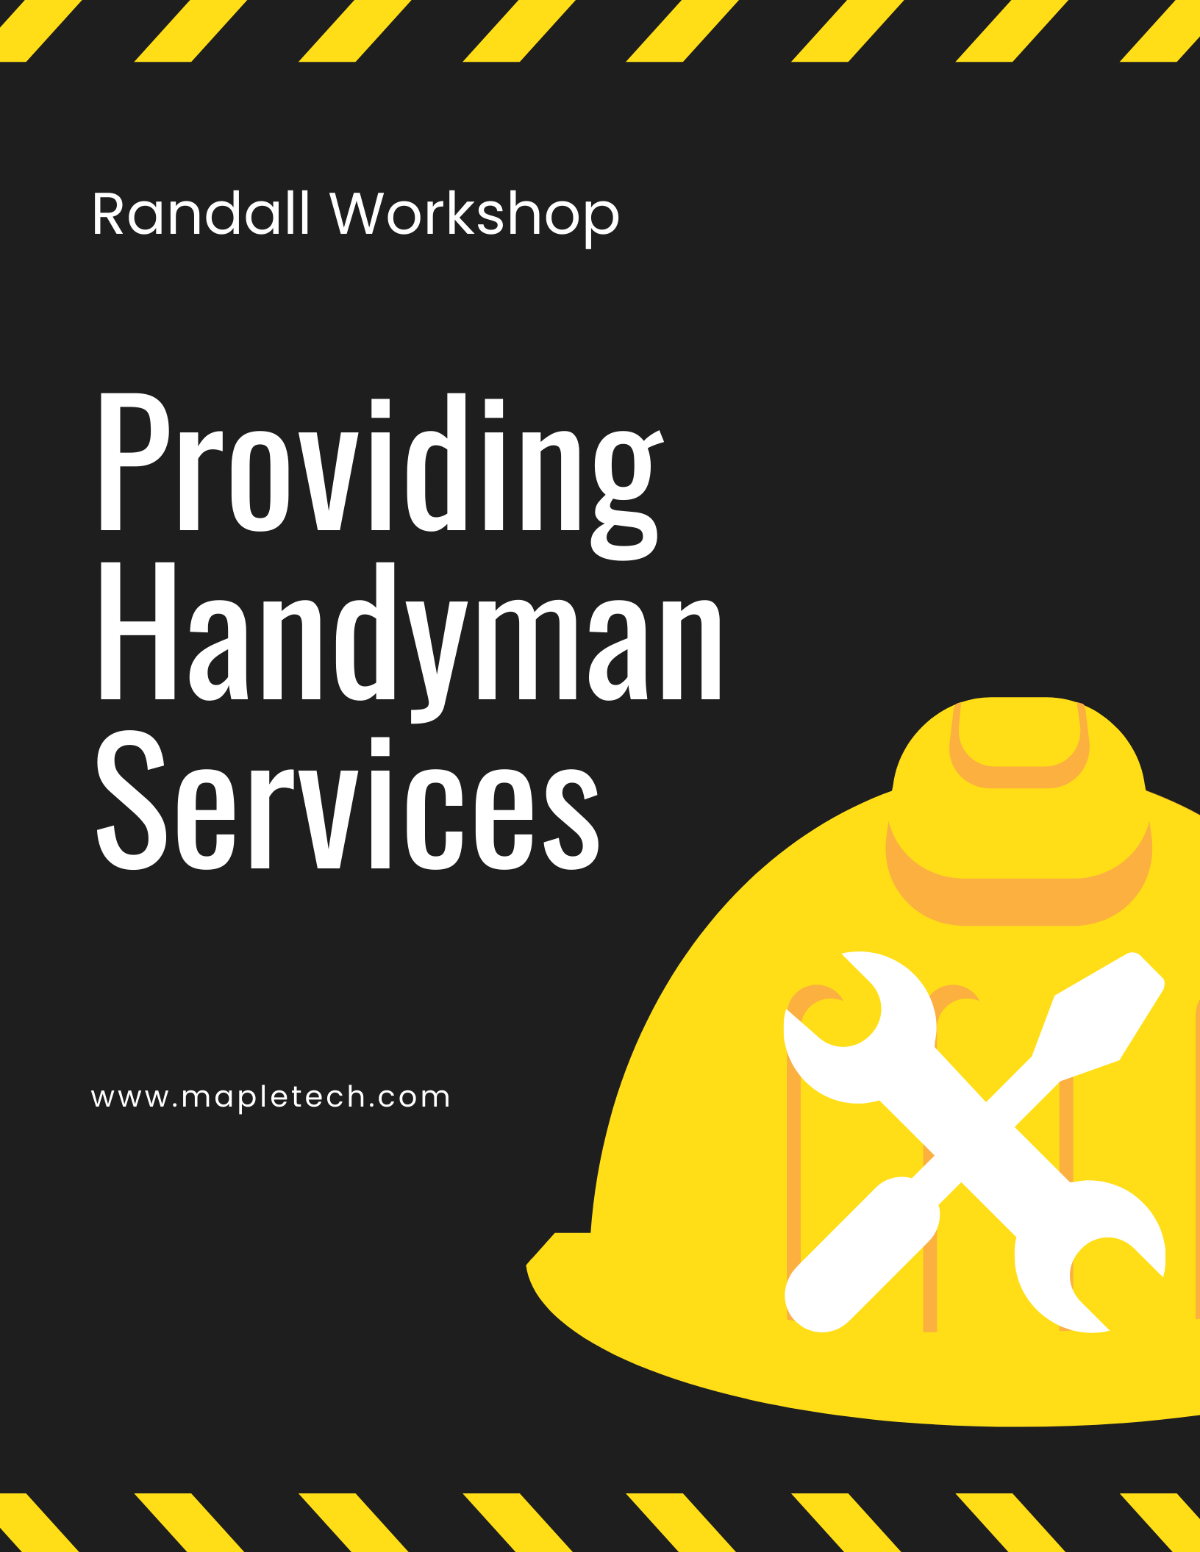 Simple Handyman Services Flyer